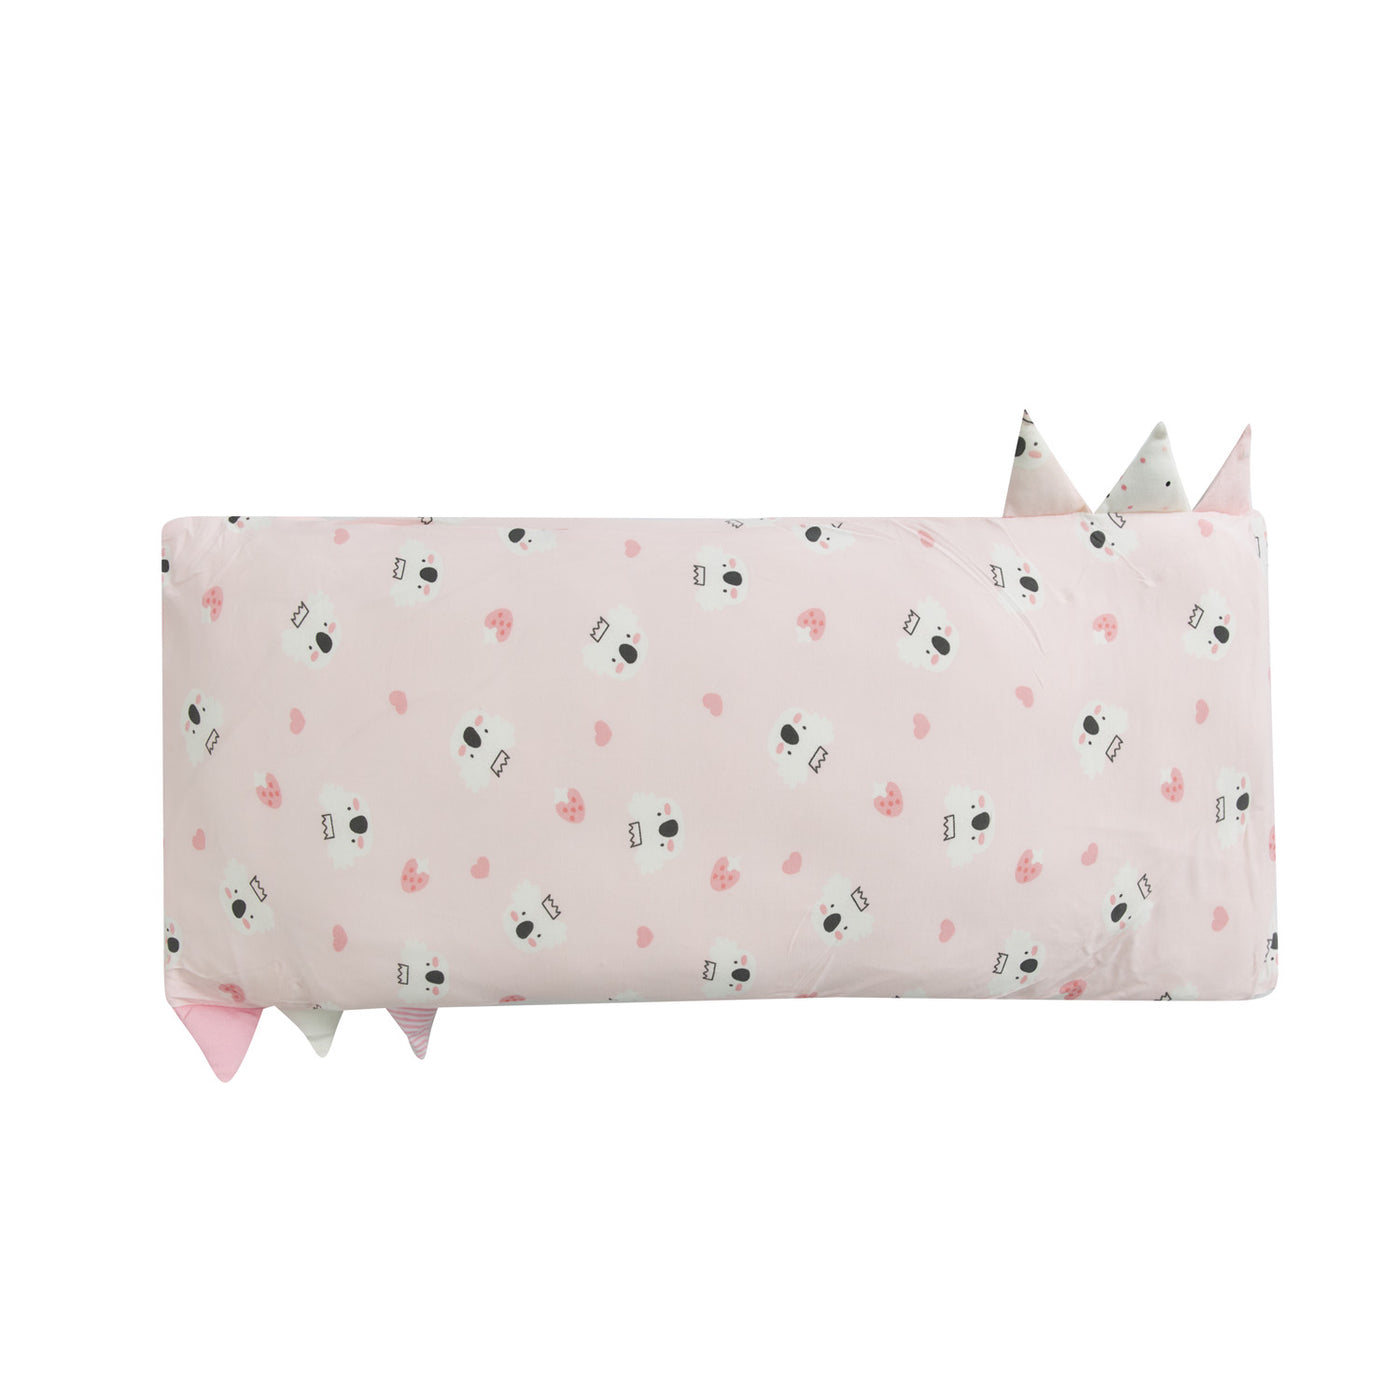 Baby Kids Bamboo Pillow Case Baby Bed-Time Hug Pillow Jumbo Pillow w Teething Tag Pink w White Koalas - Little Kooma